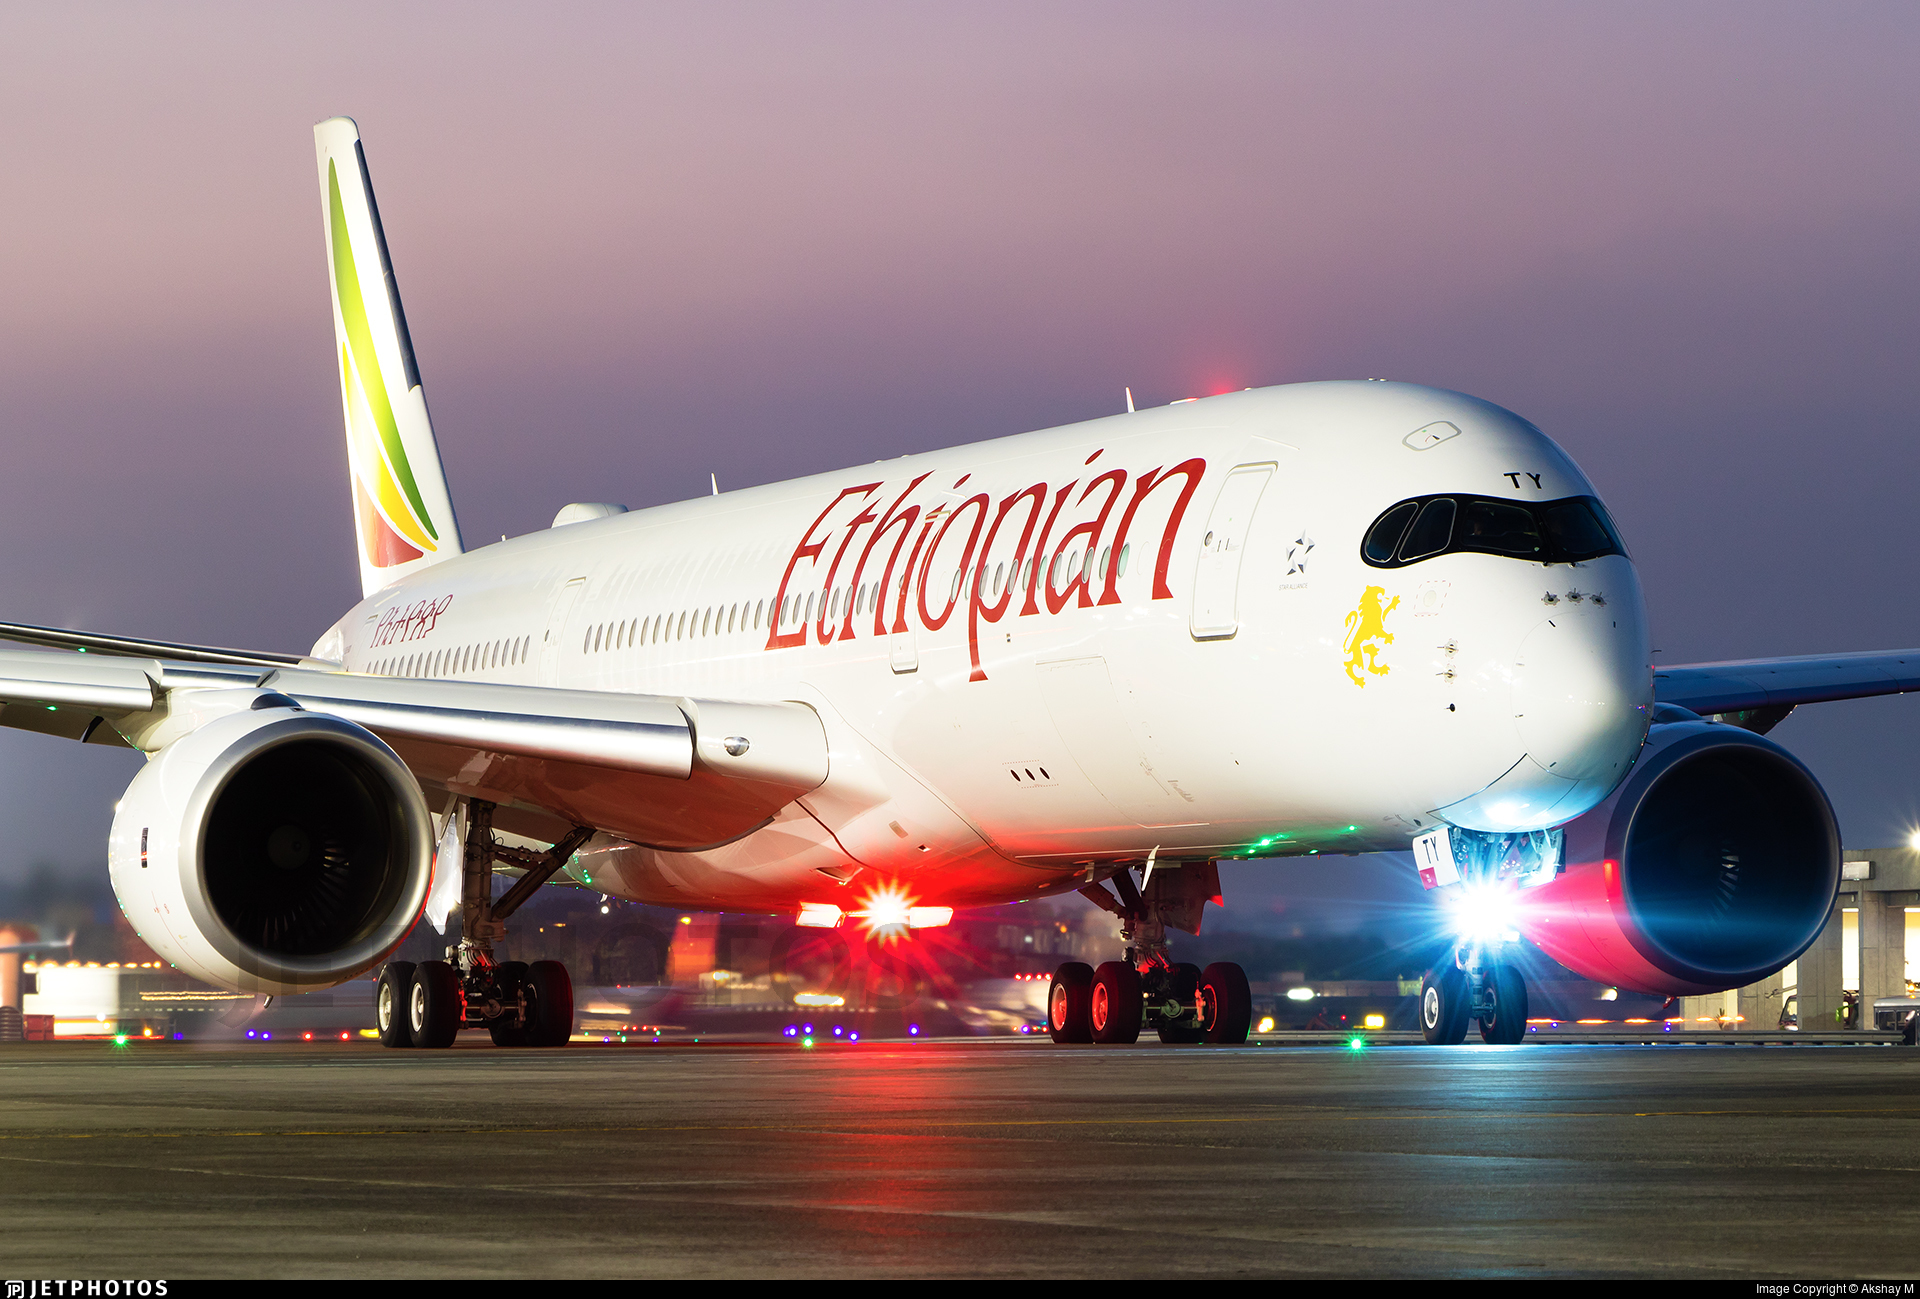 Ethiopian Airlines: Περίπου έξι μήνες θα χρειαστούν για να ολοκληρωθούν οι έλεγχοι DNA των θυμάτων του Boeing